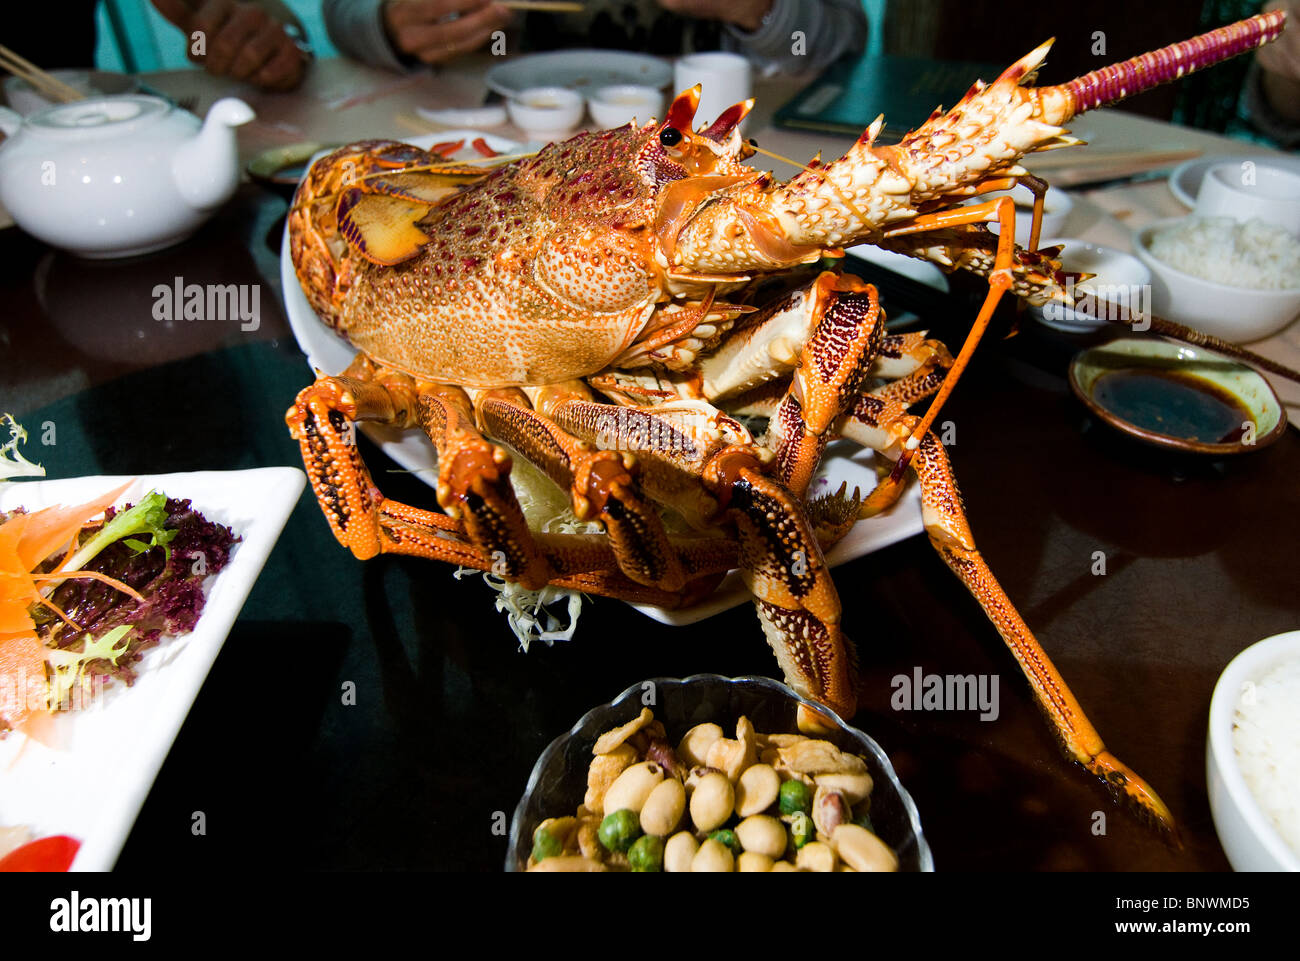 A big tasty Lobster. Stock Photo